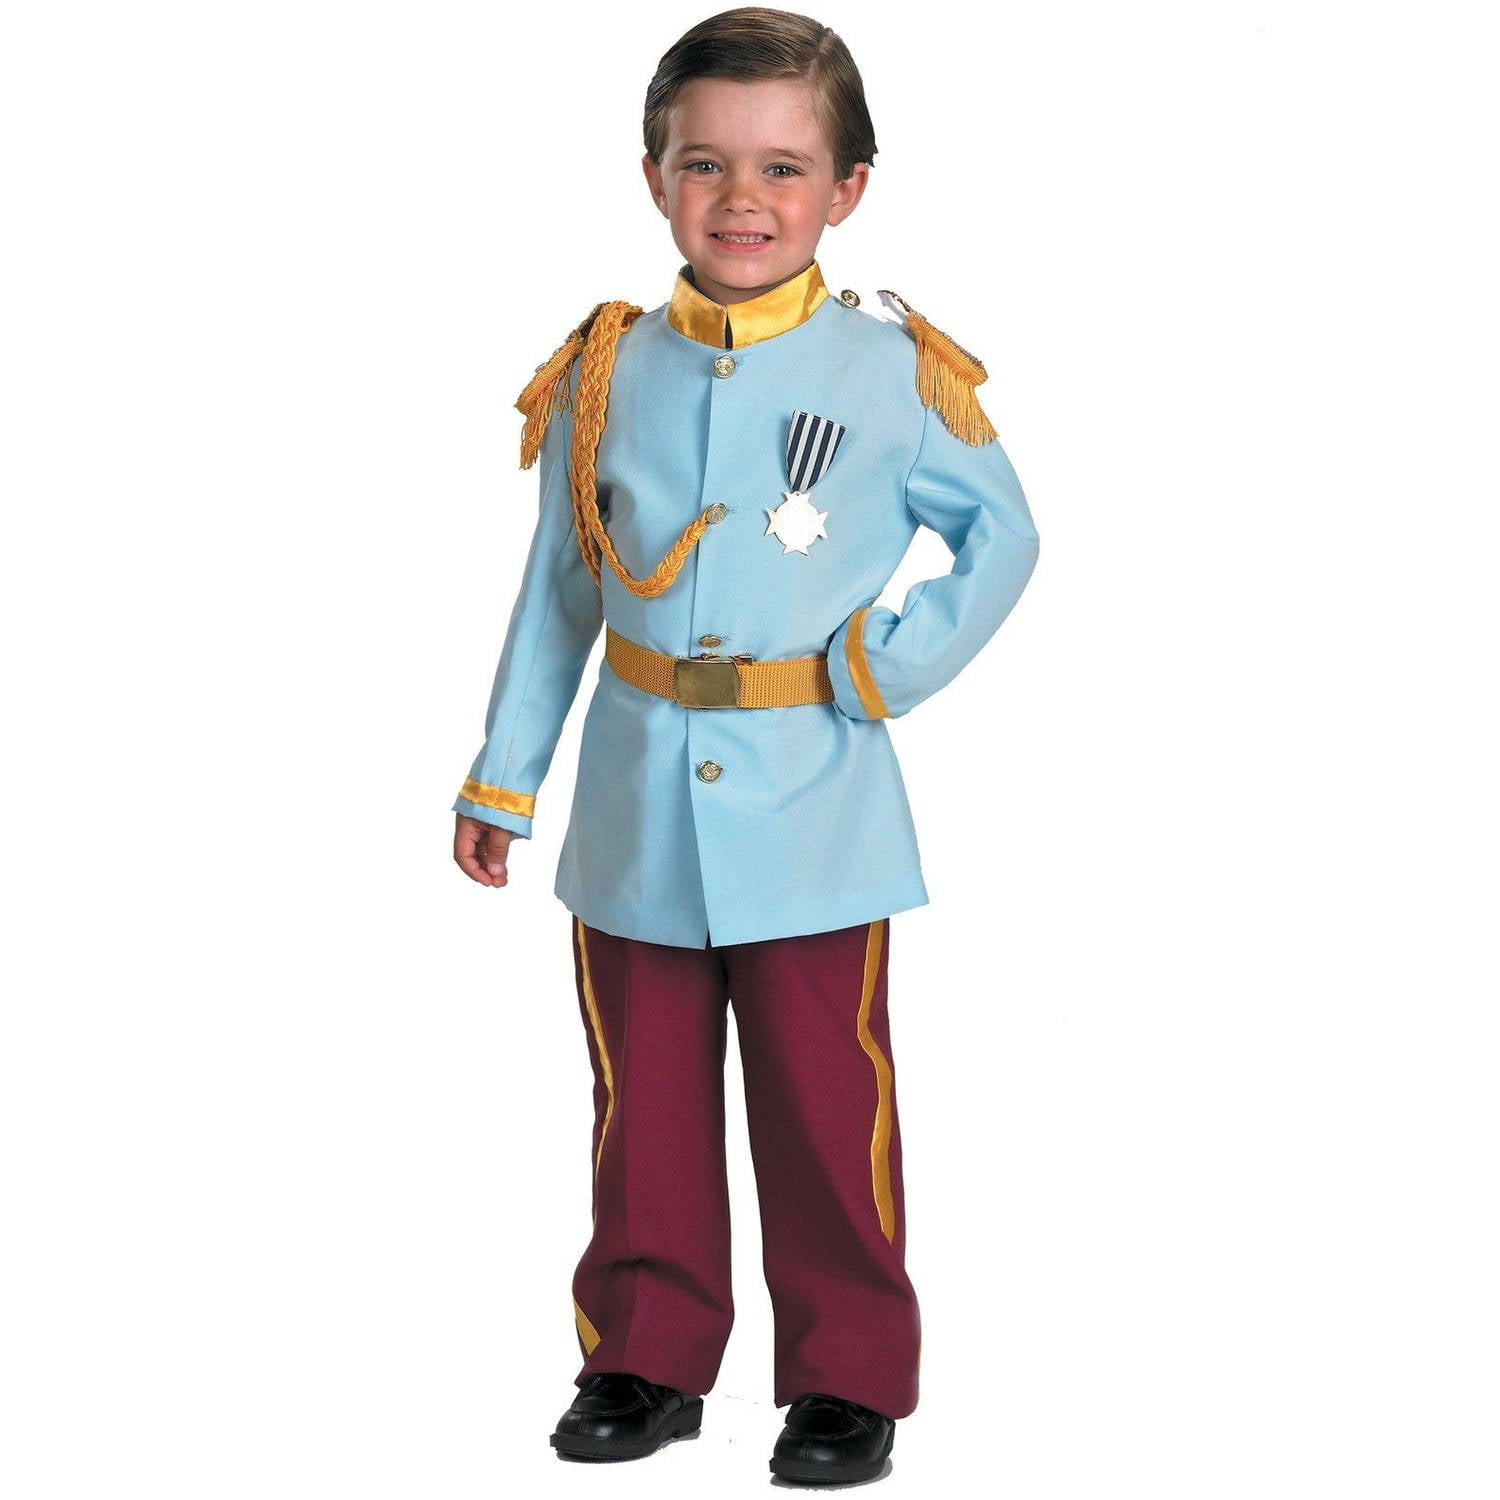 Disney Prince Charming Child Halloween Costume, Small (4-6) - Walmart.com